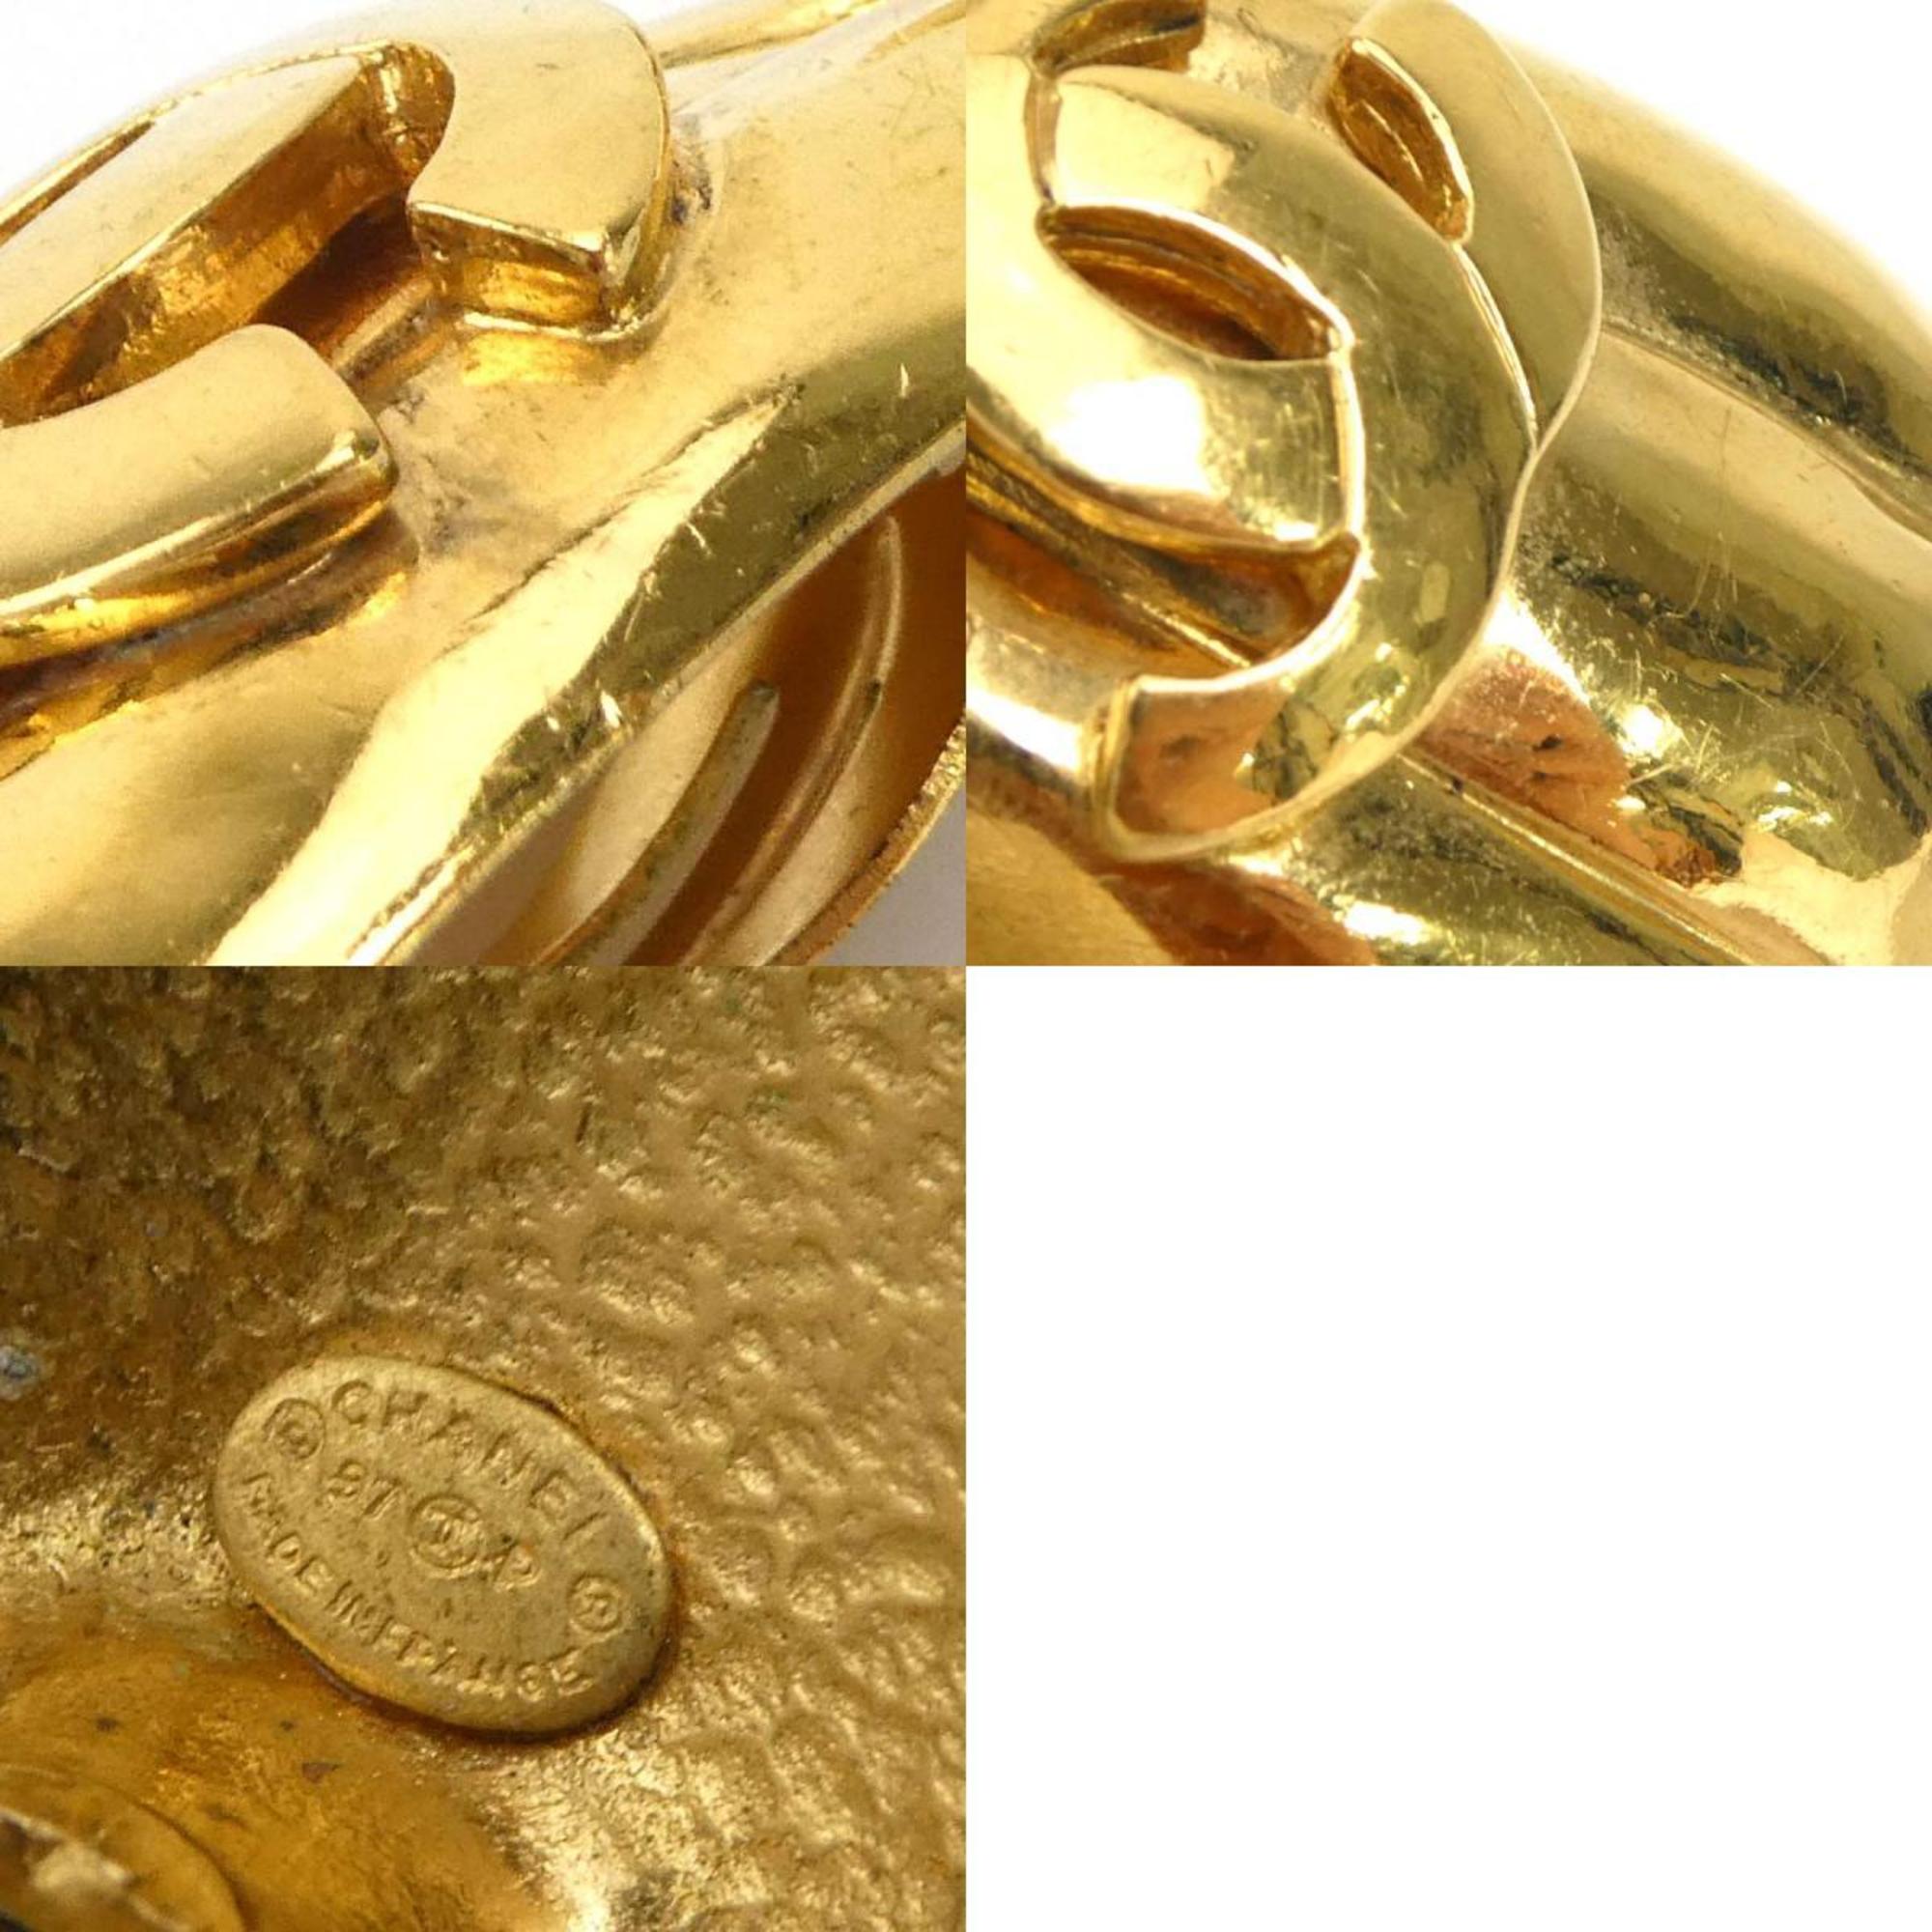 CHANEL Coco Mark Metal Gold Earrings for Women e58615g